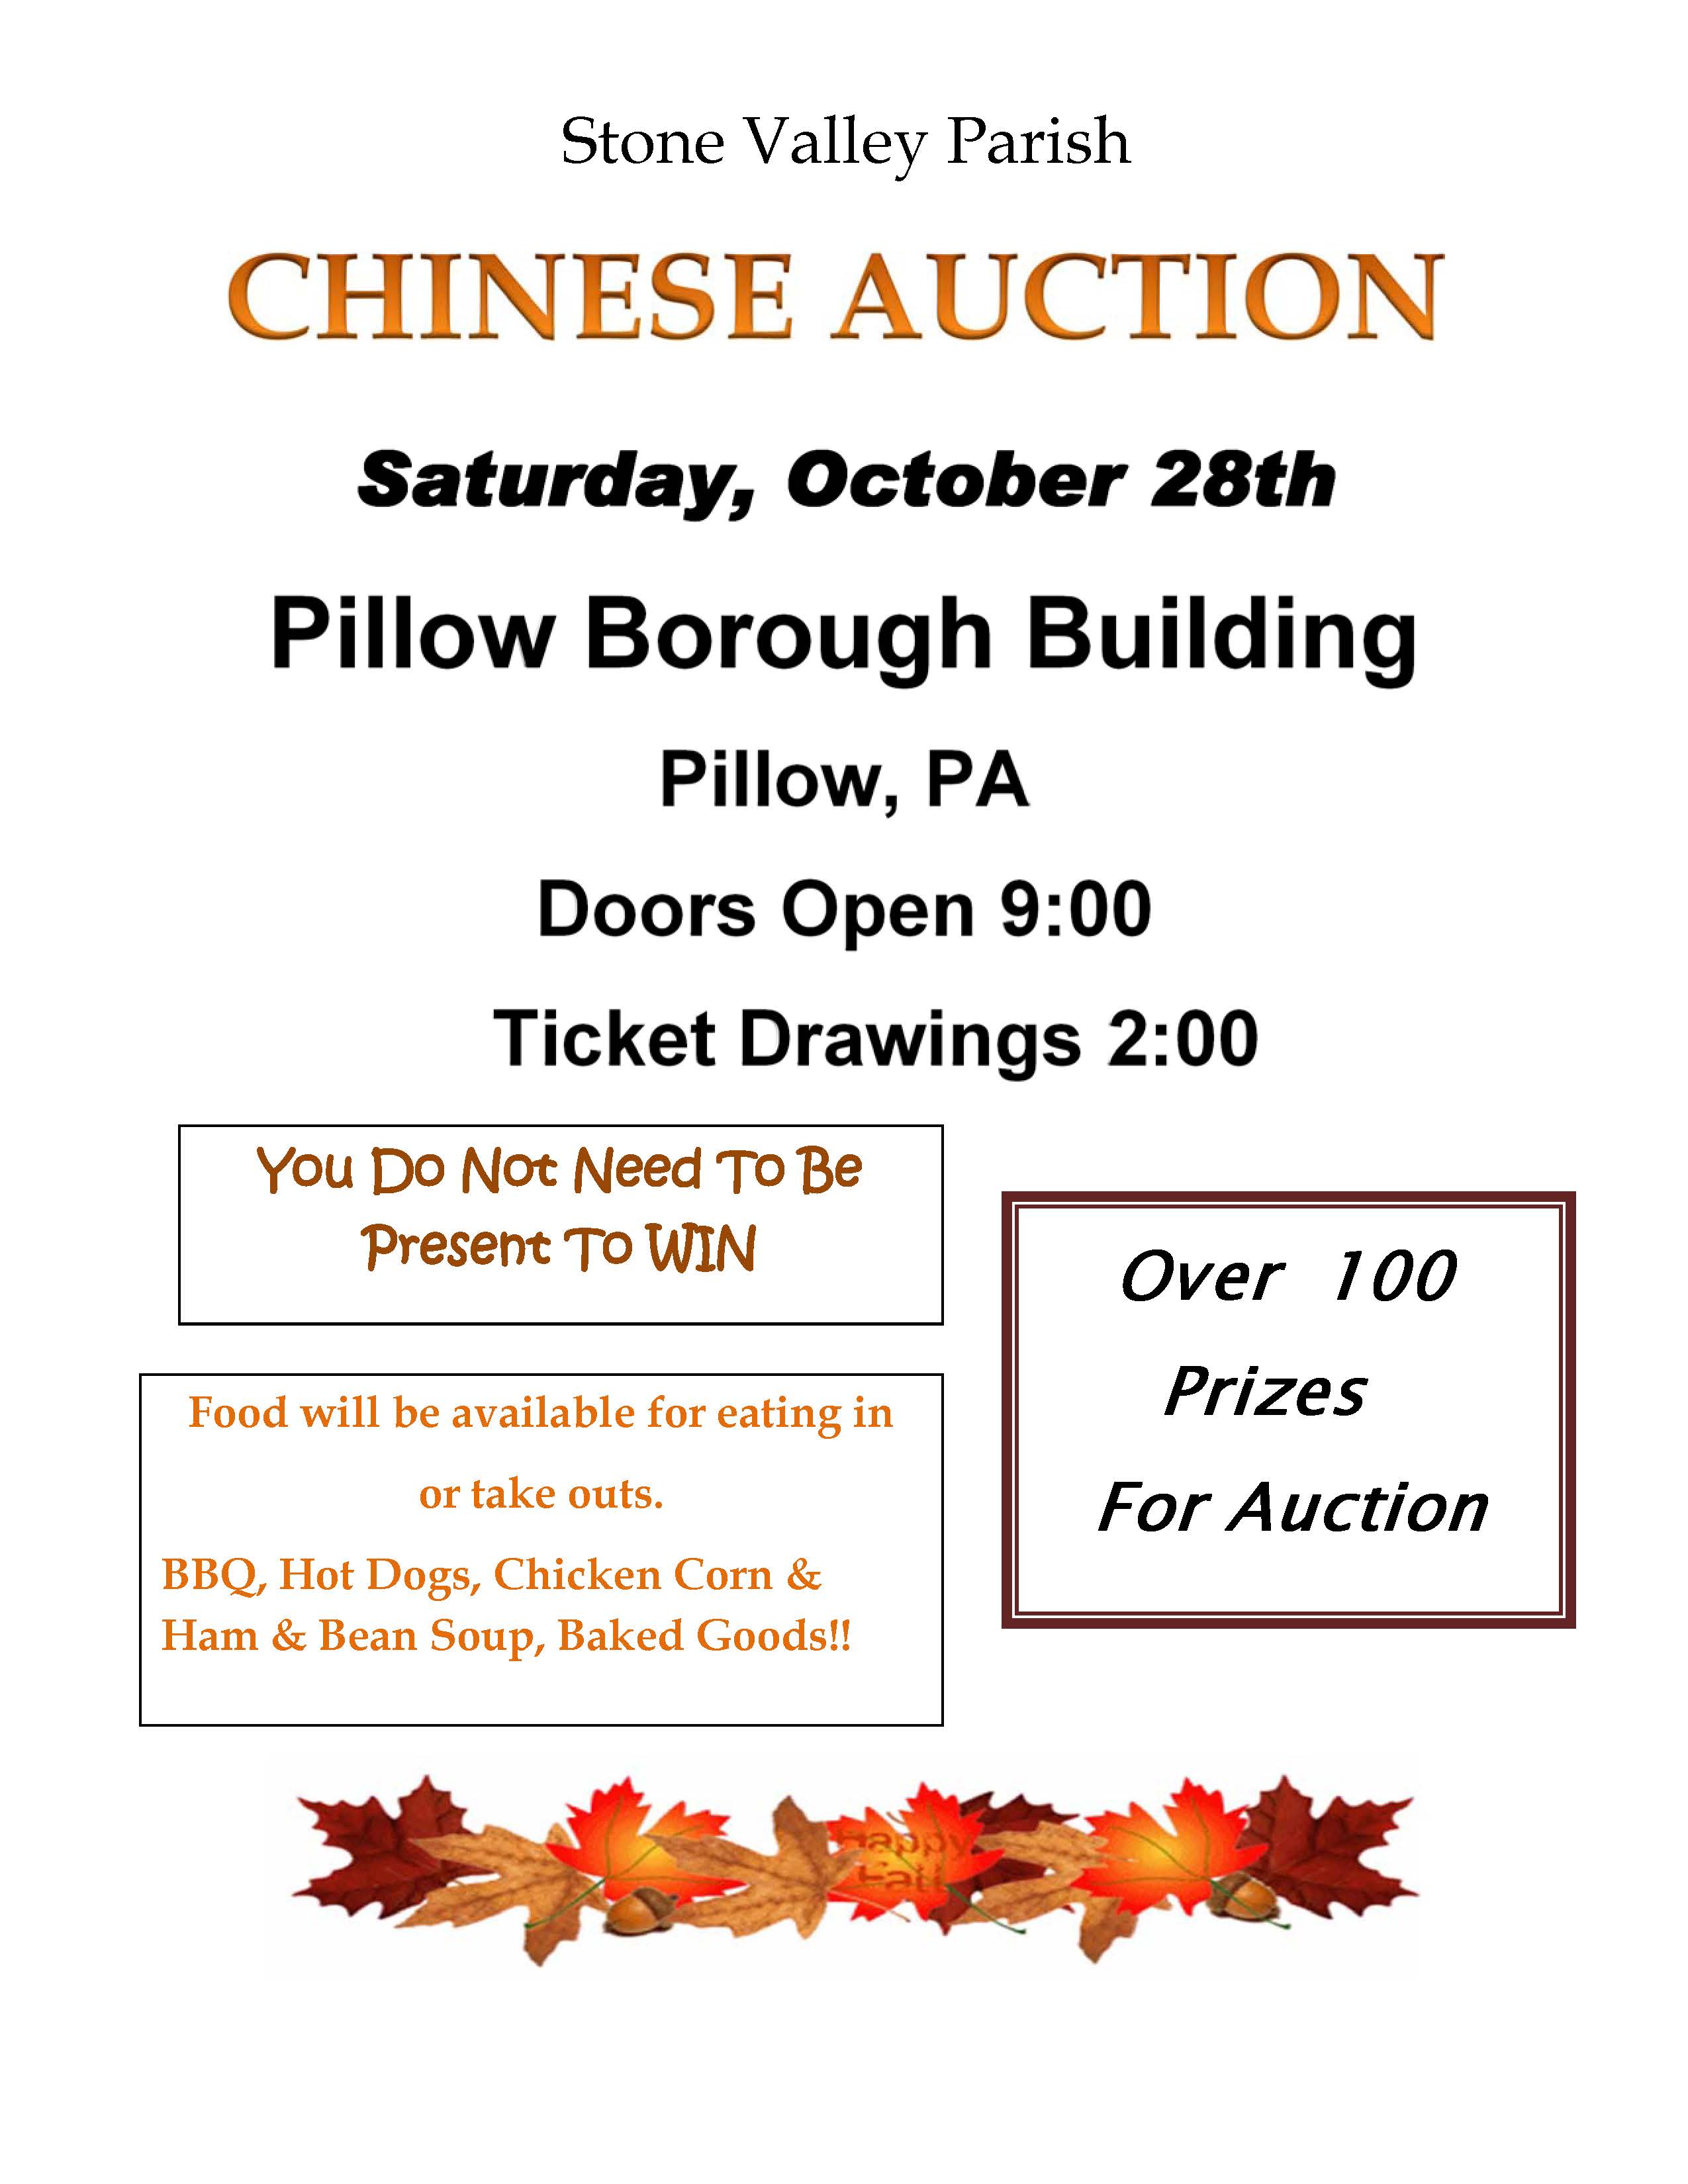 Parish Chinese Auction – October 28